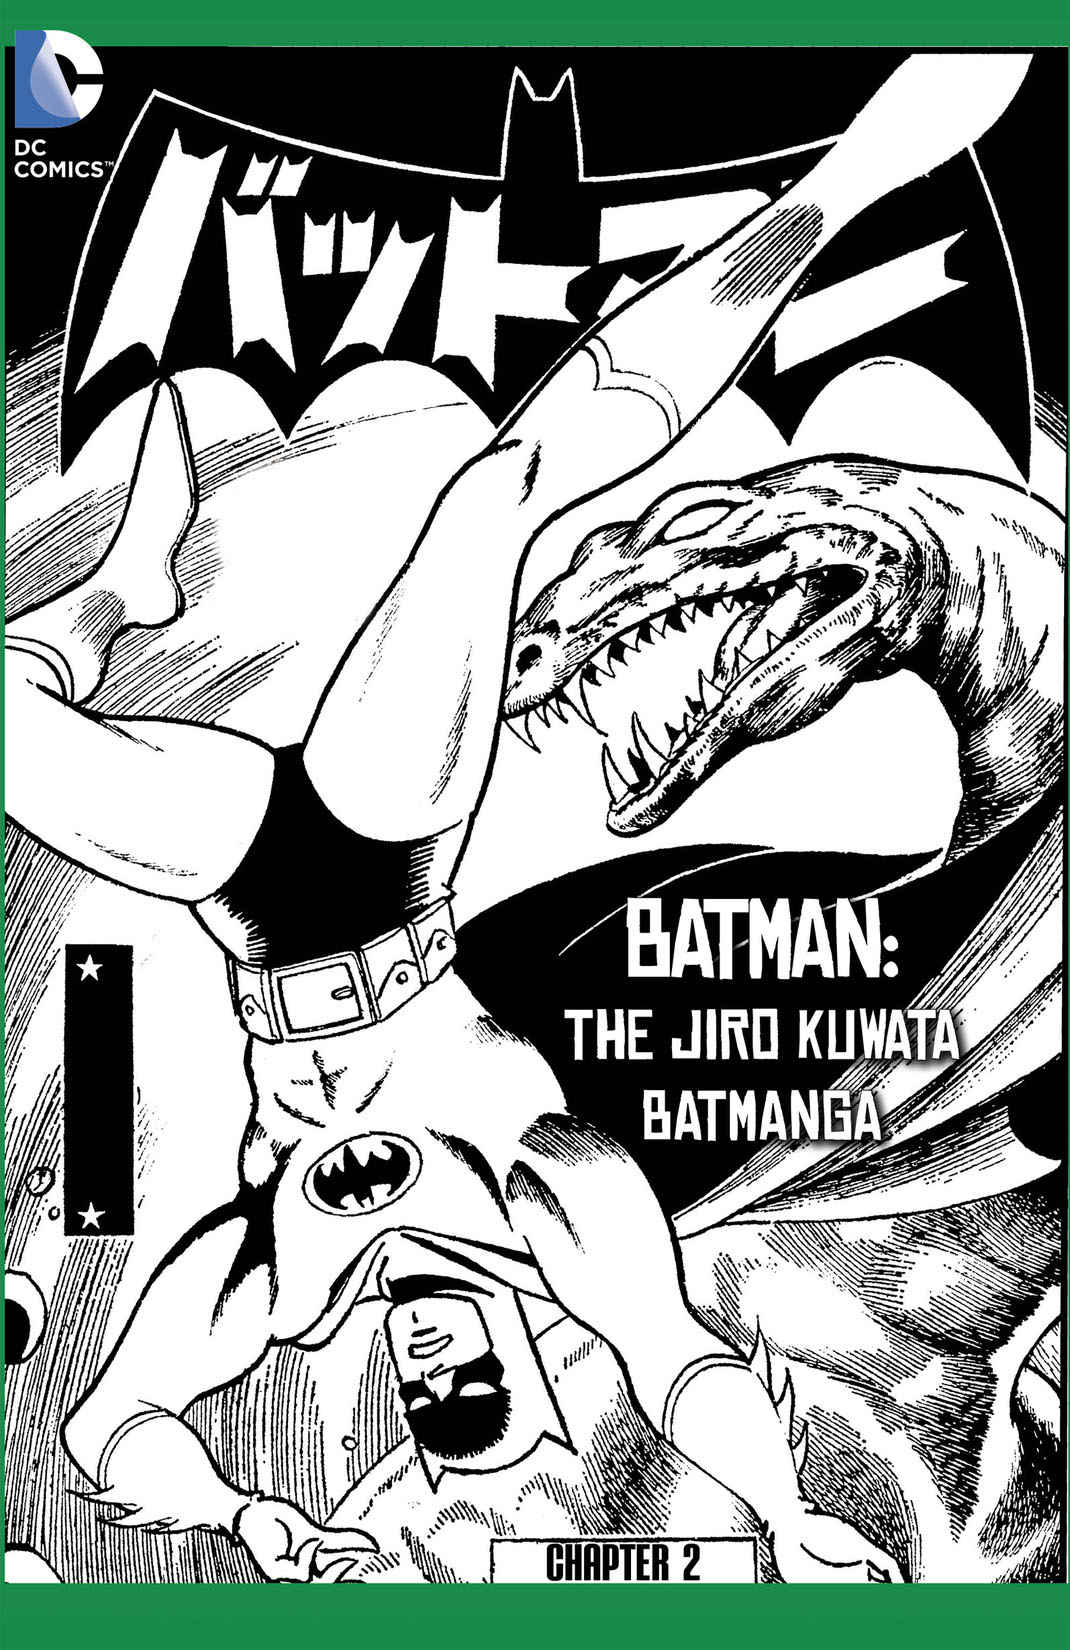 Batman: The Jiro Kuwata Batmanga #36 preview images